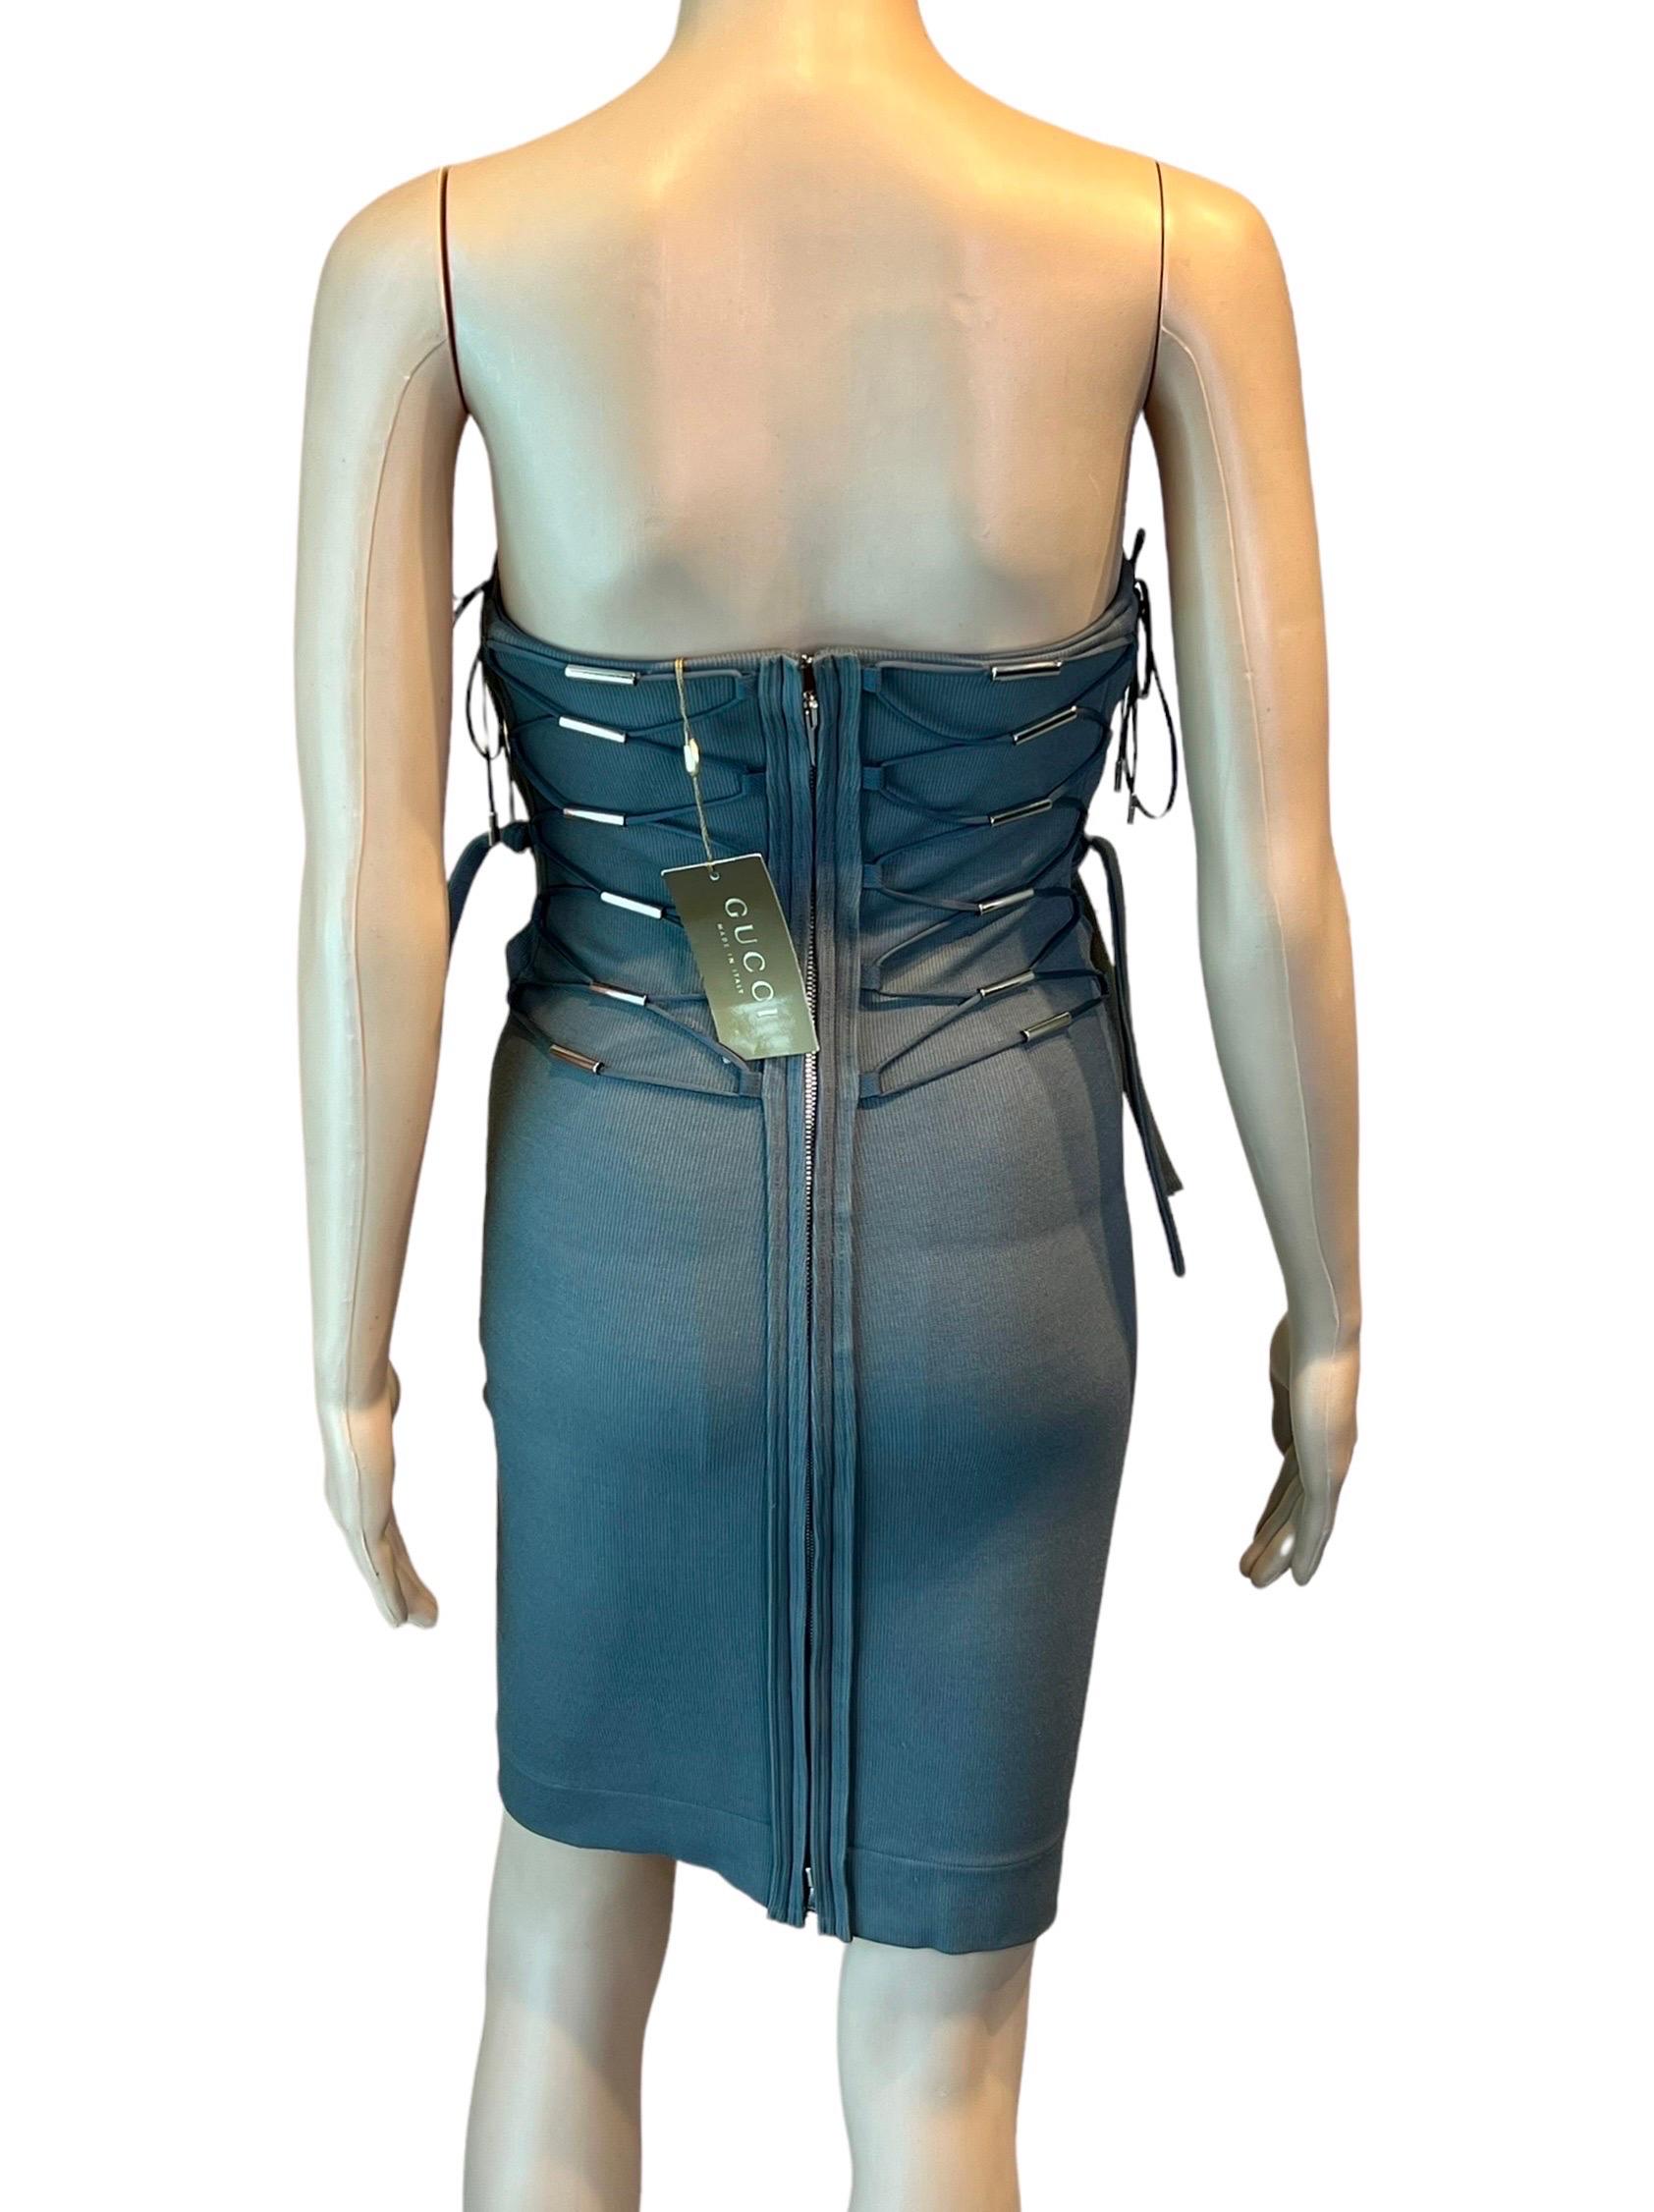 Gucci S/S 2010 Unworn Bodycon Lace Up Bandage Grey Mini Dress For Sale 3